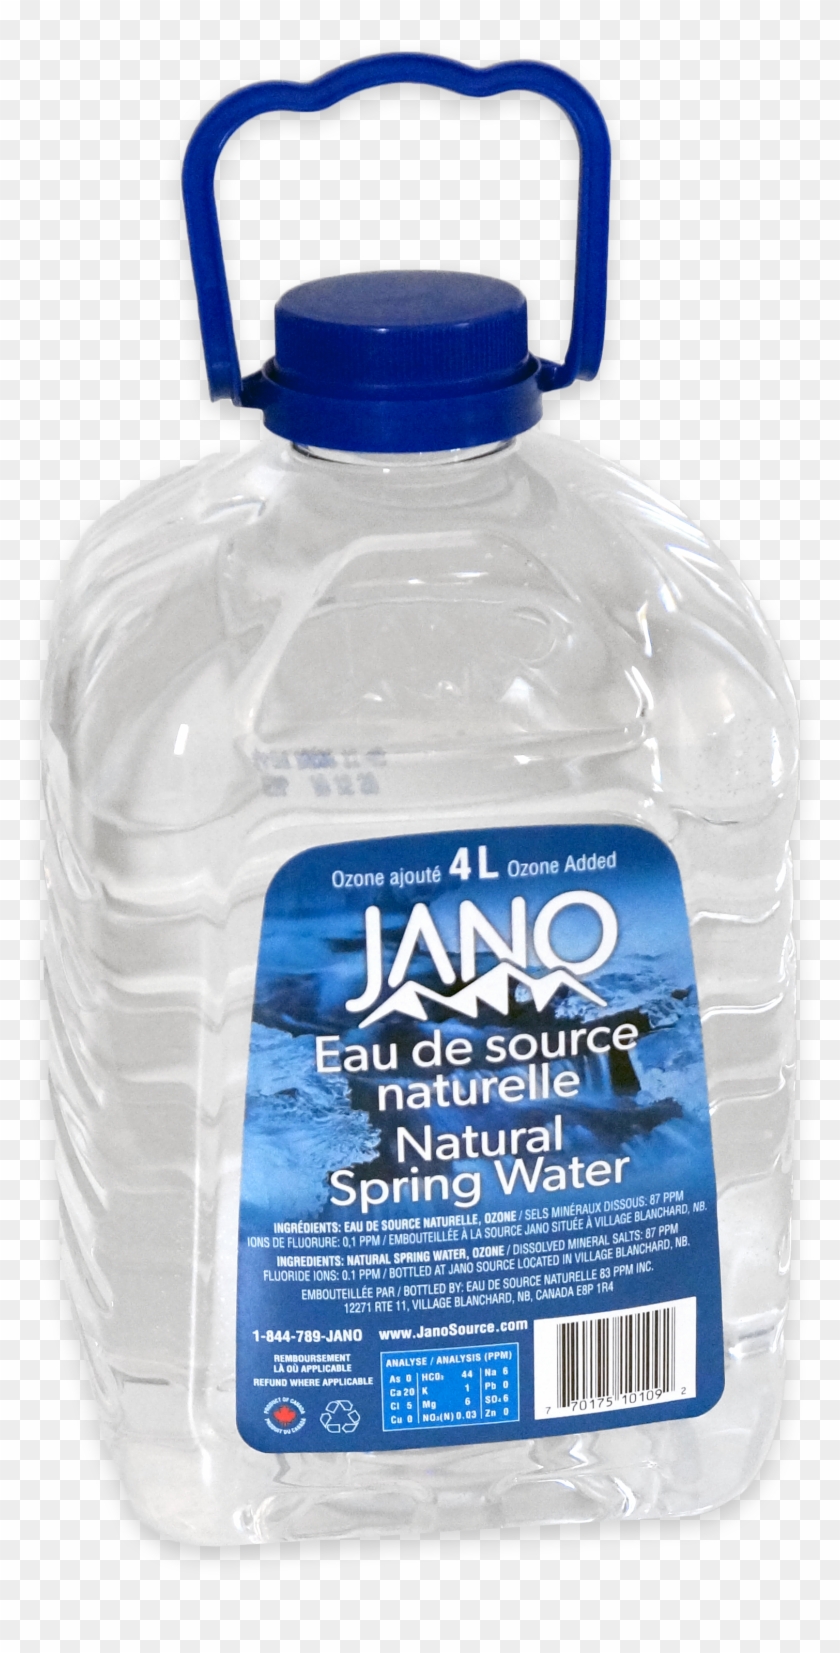 Jano - Water Bottle Clipart #5407473